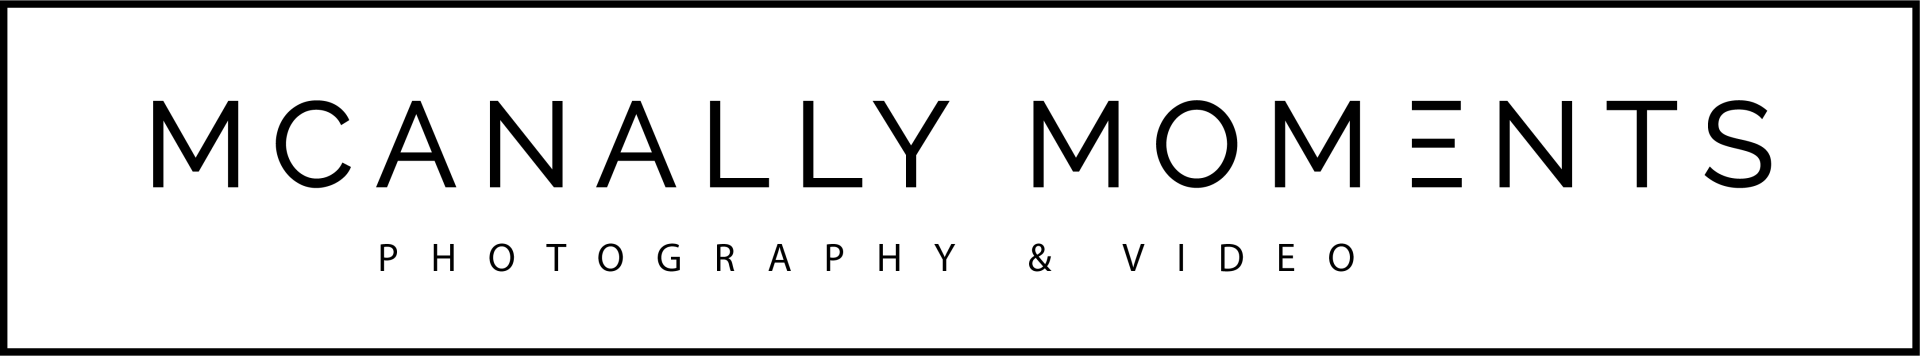 mcanally moments modesto logo